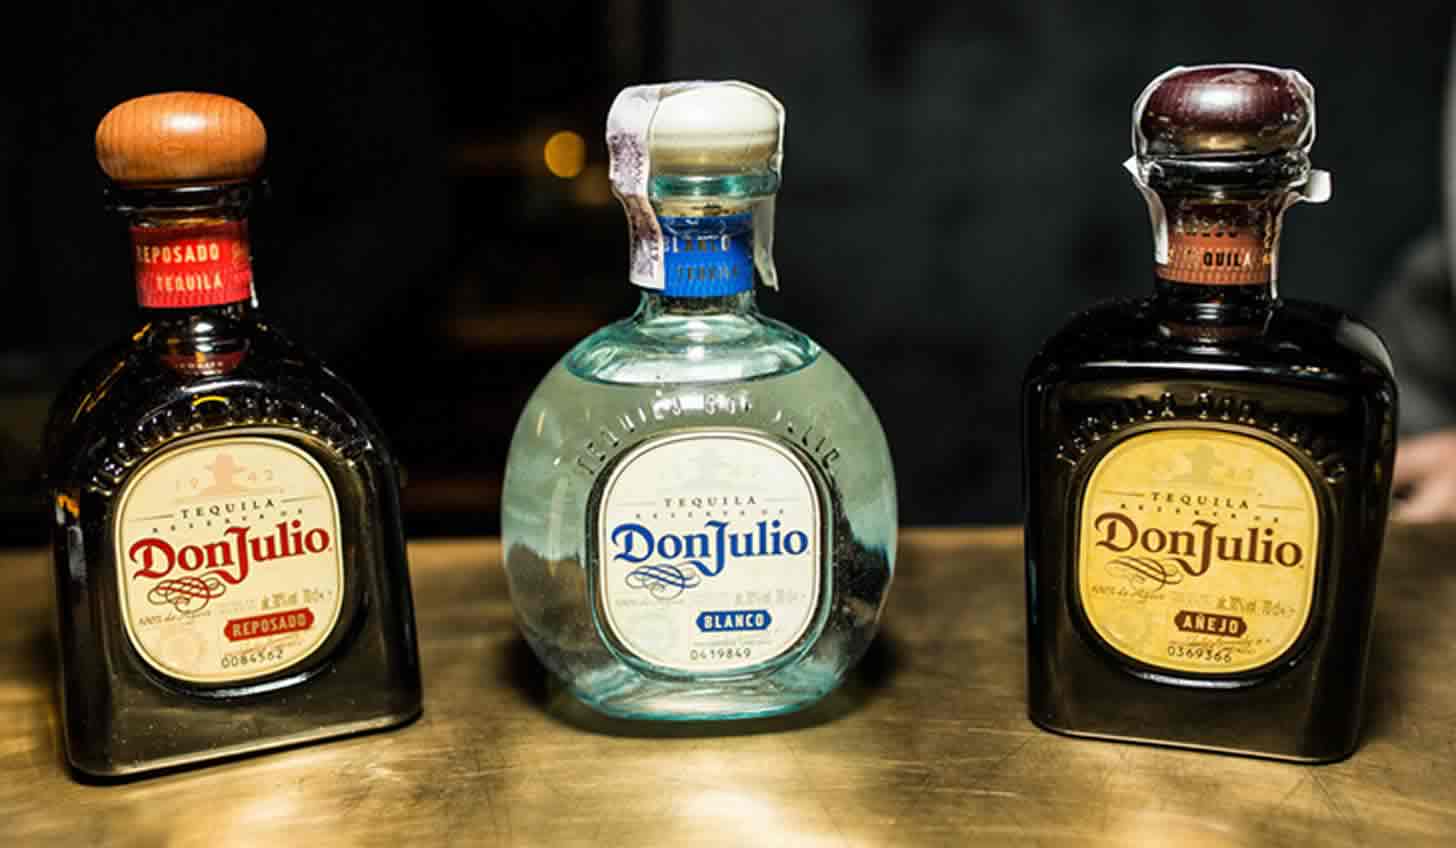 Текила don julio (дон хулио): описание напитка из сердца мексиси